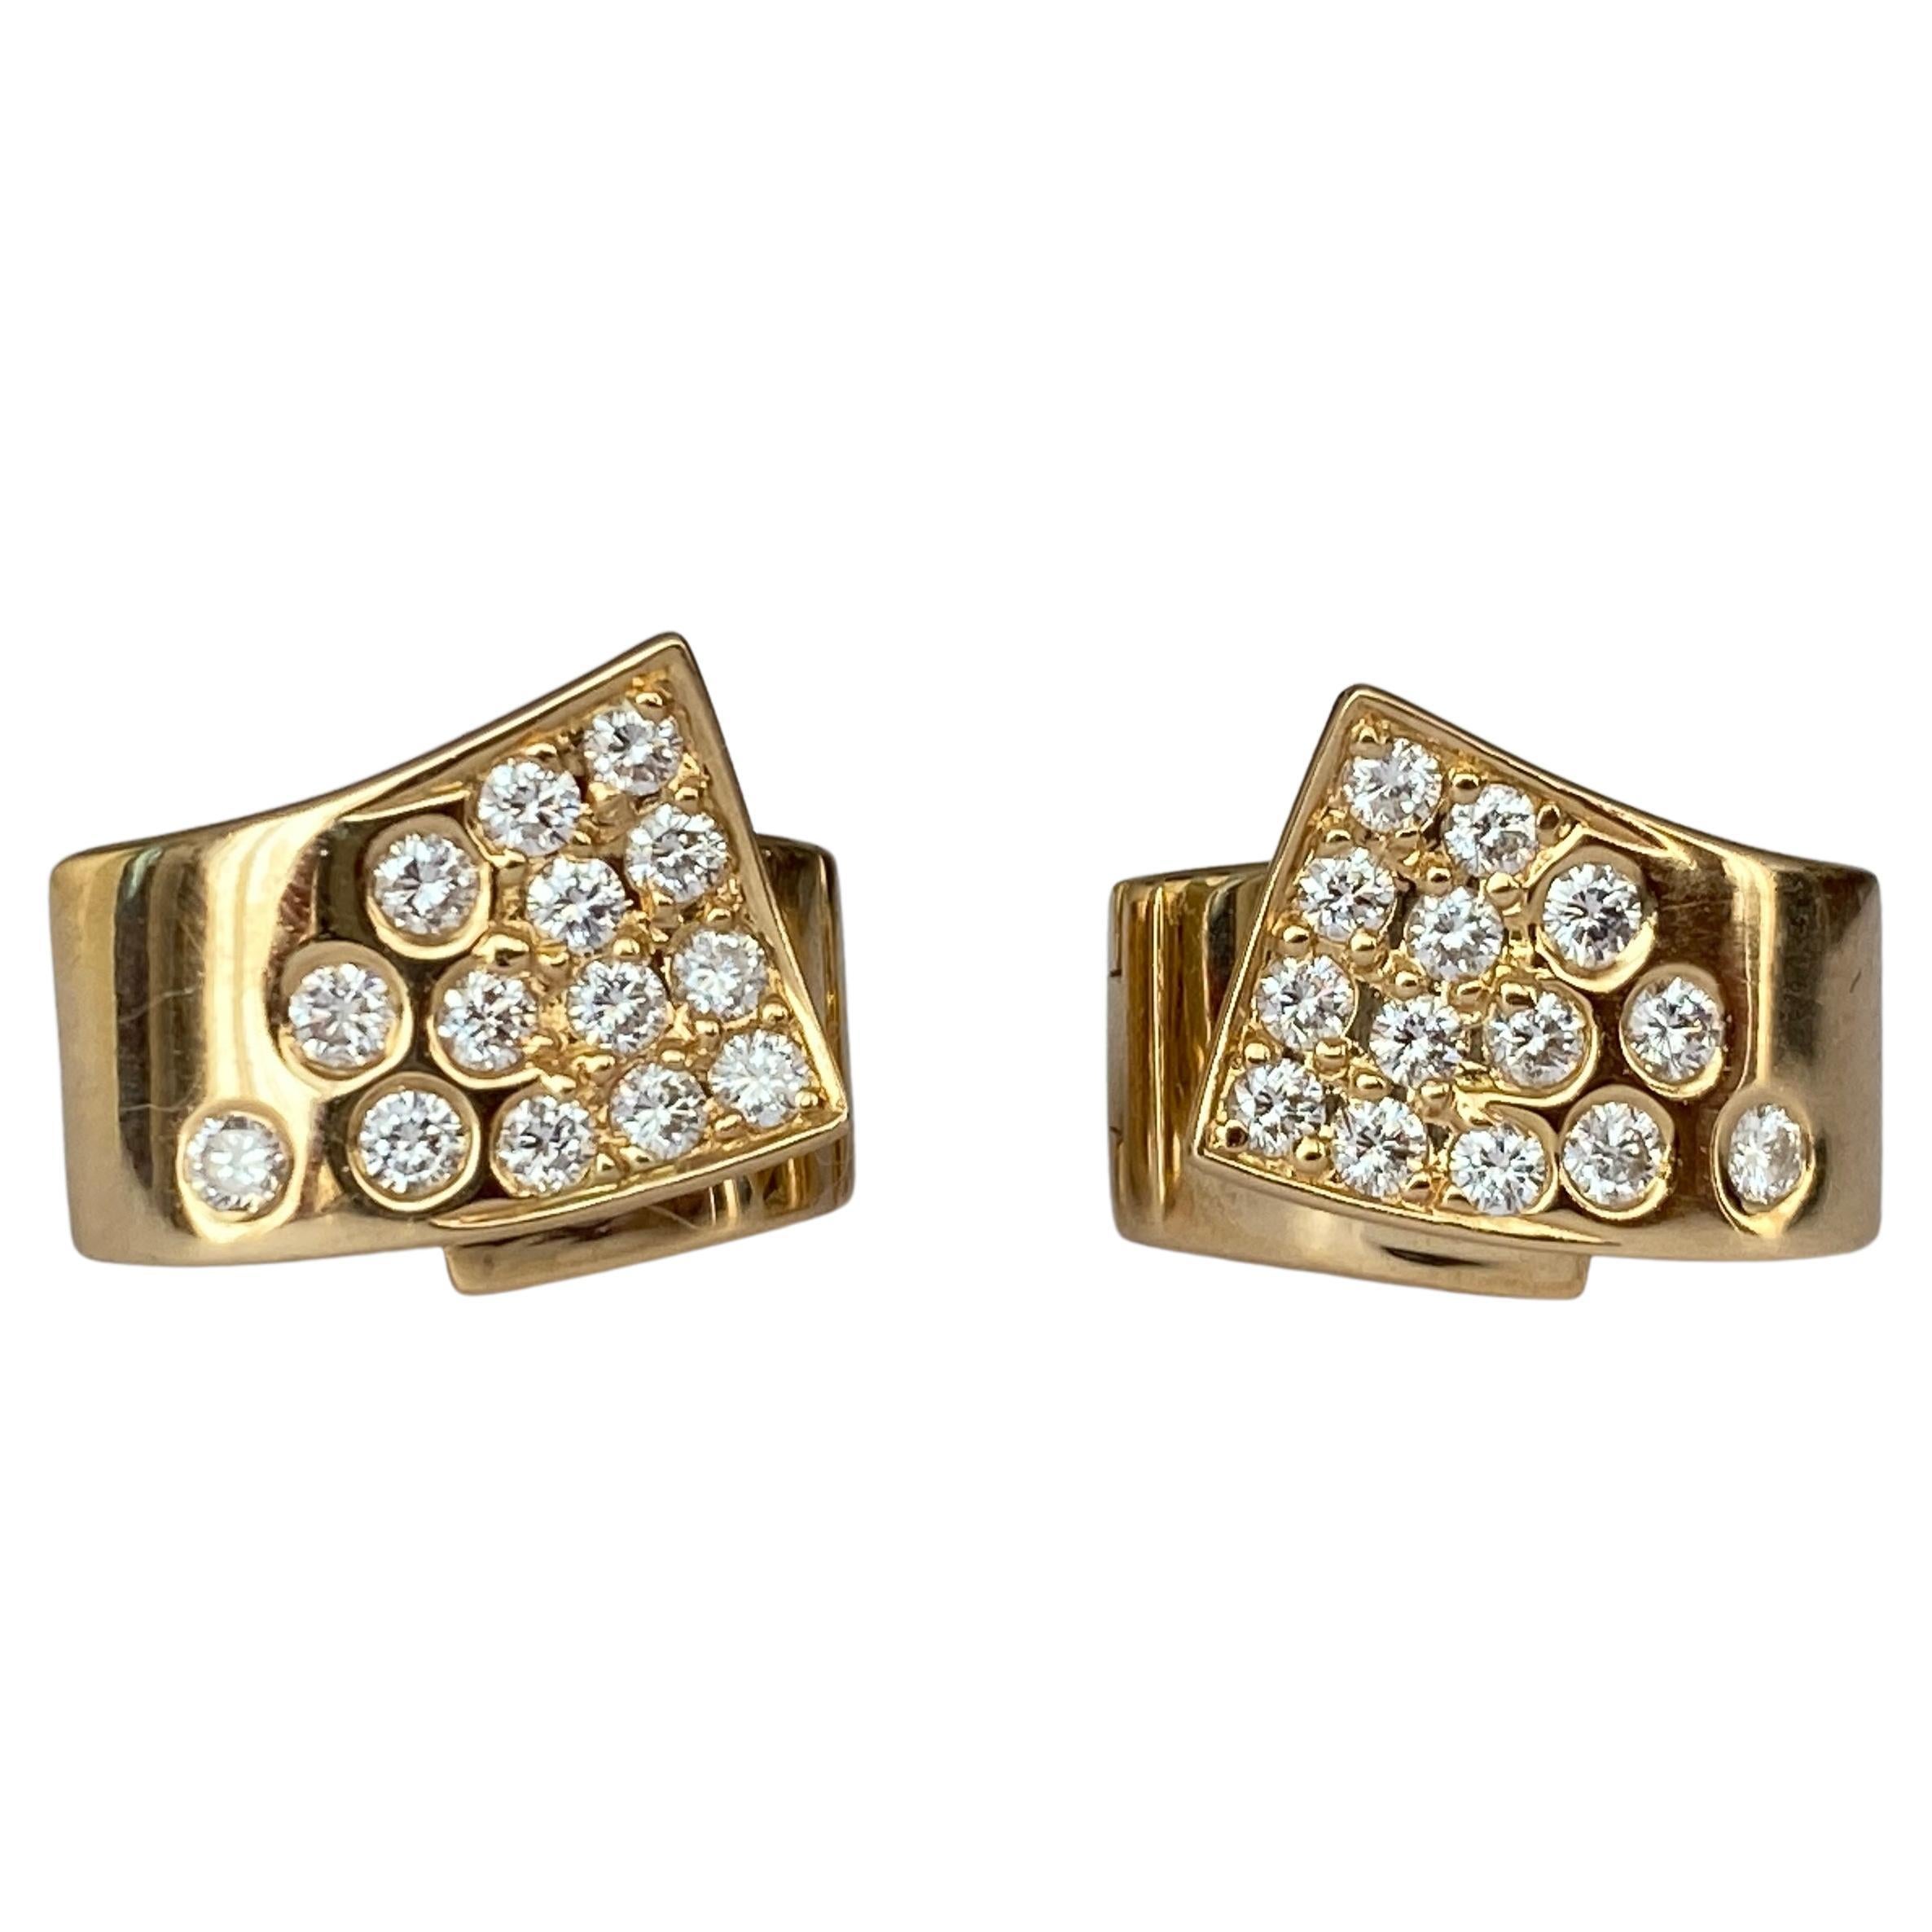 French Designer Louis Feraud Diamond 18k Gold Earrings, Paris, Signed |  Marie Betteley Antique & Vintage Jewelry